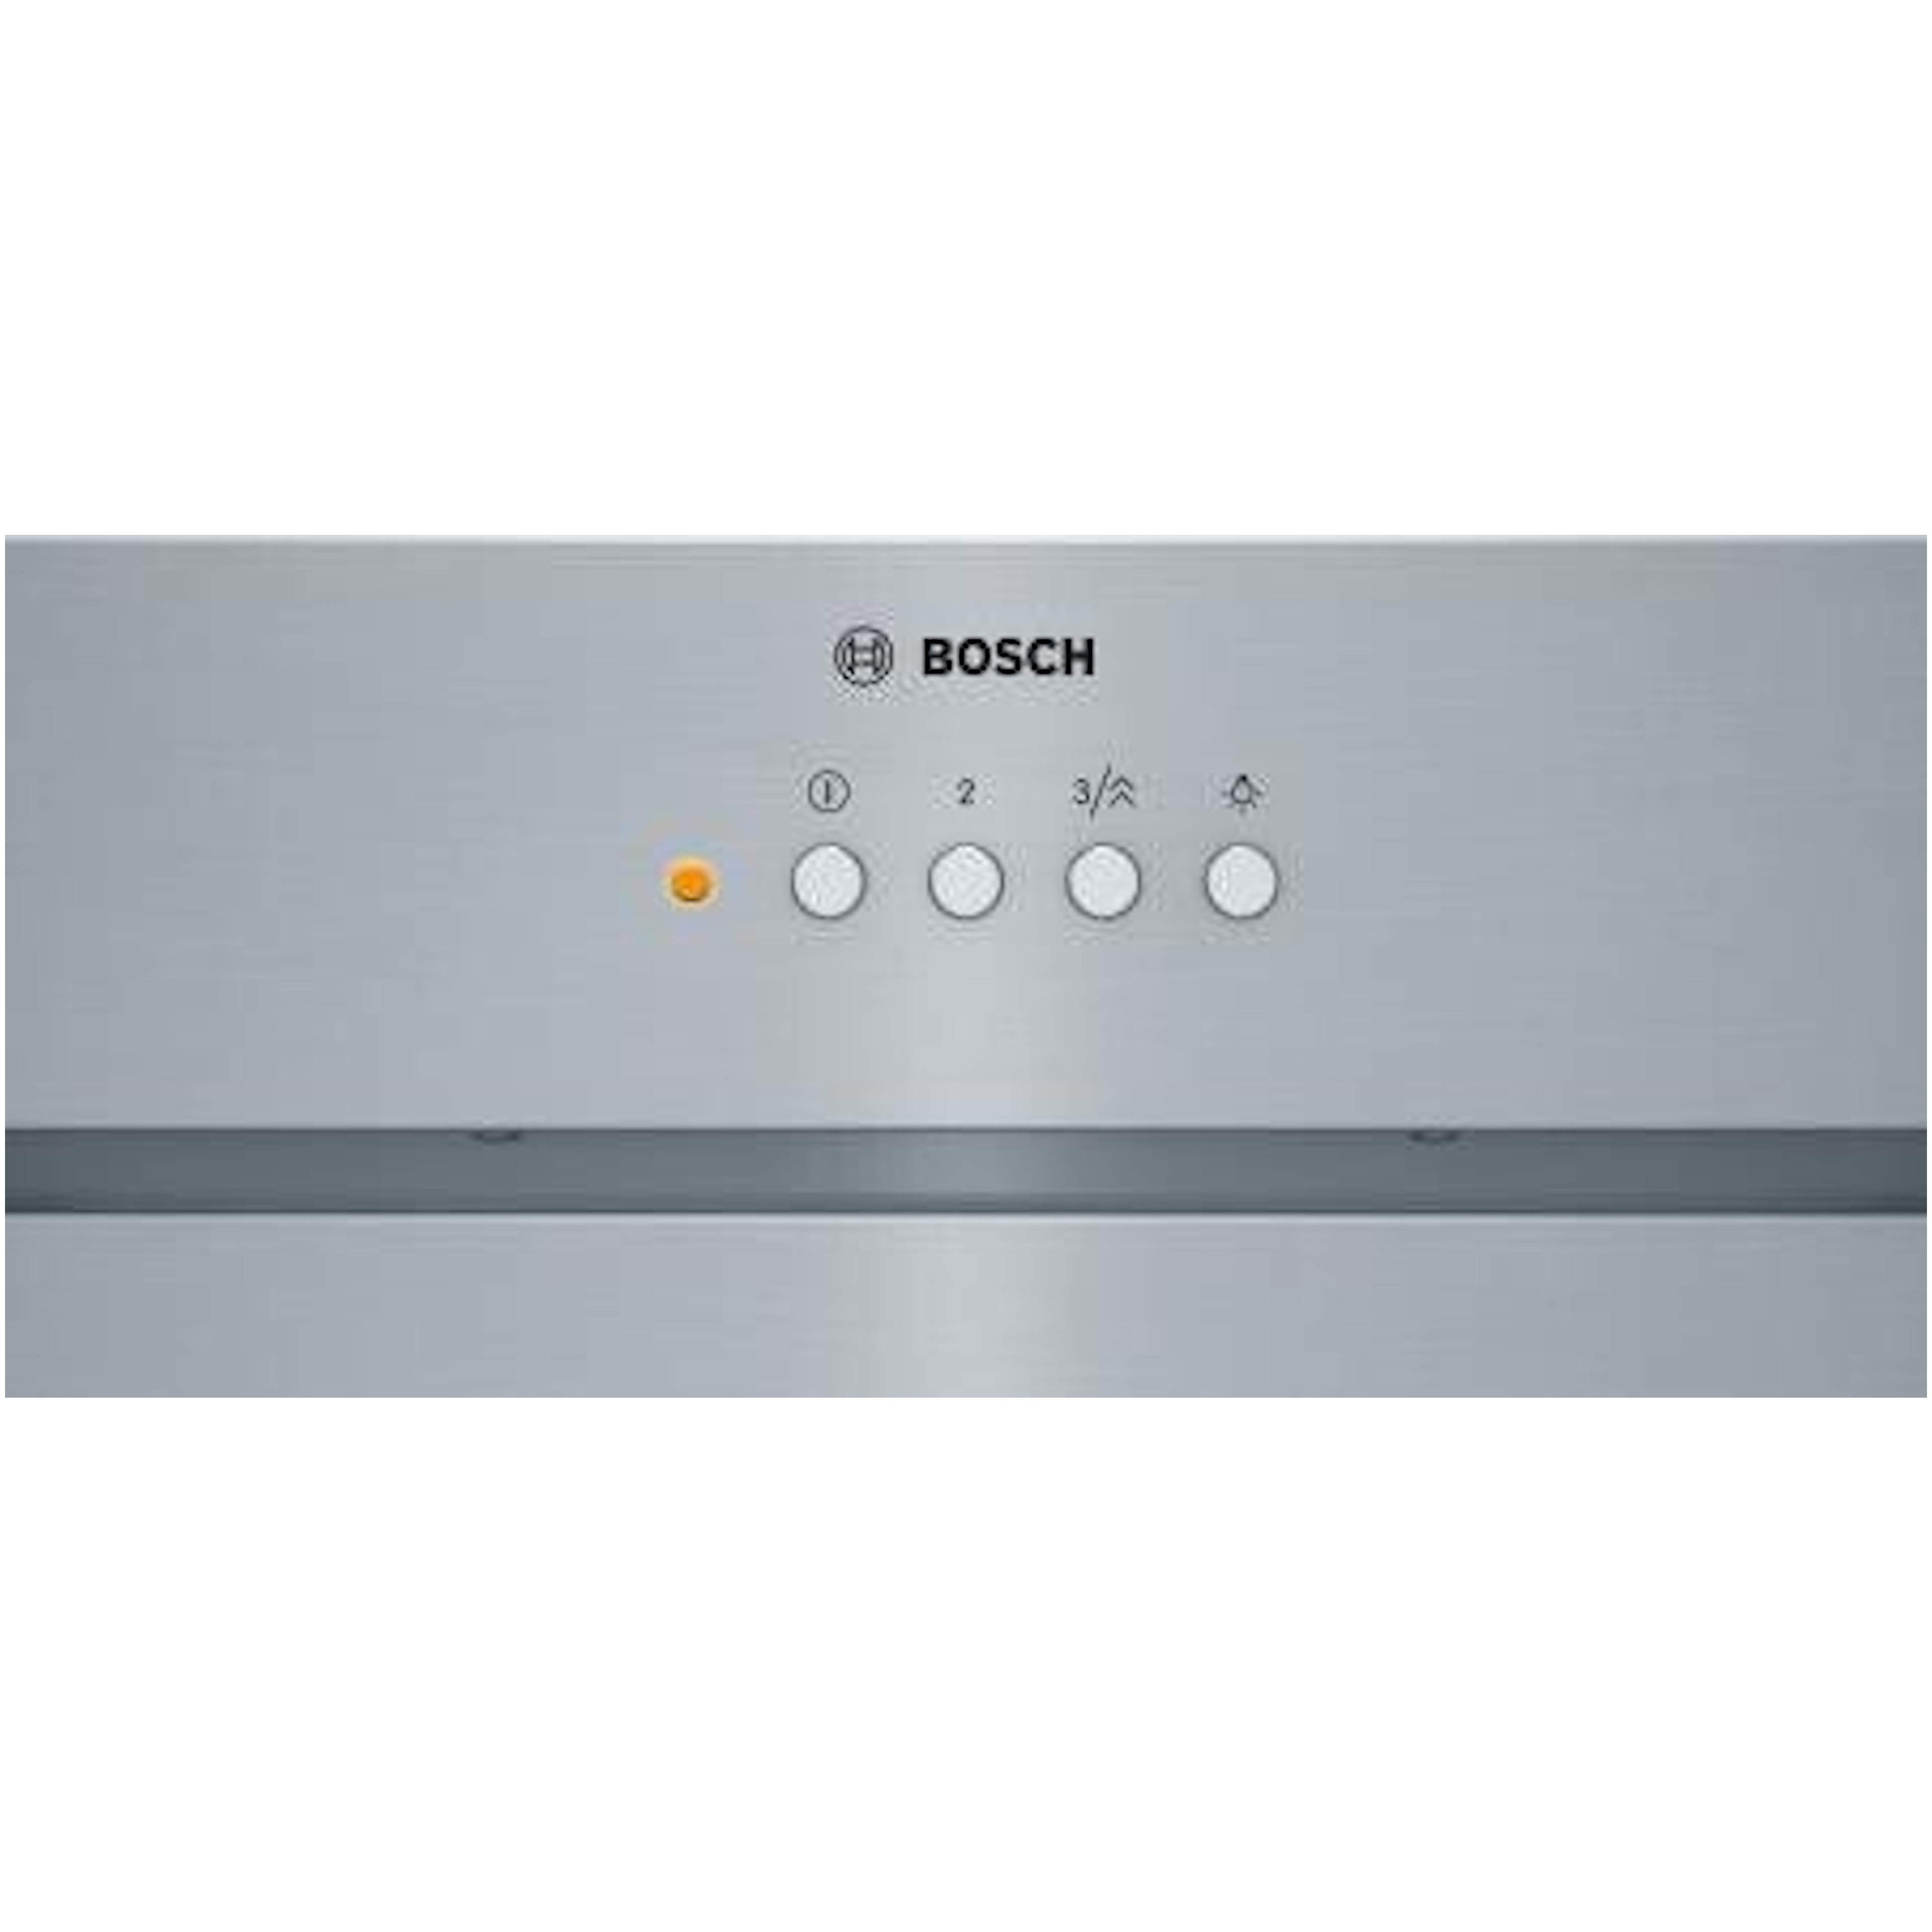 Bosch afzuigkap  DHL785C afbeelding 4